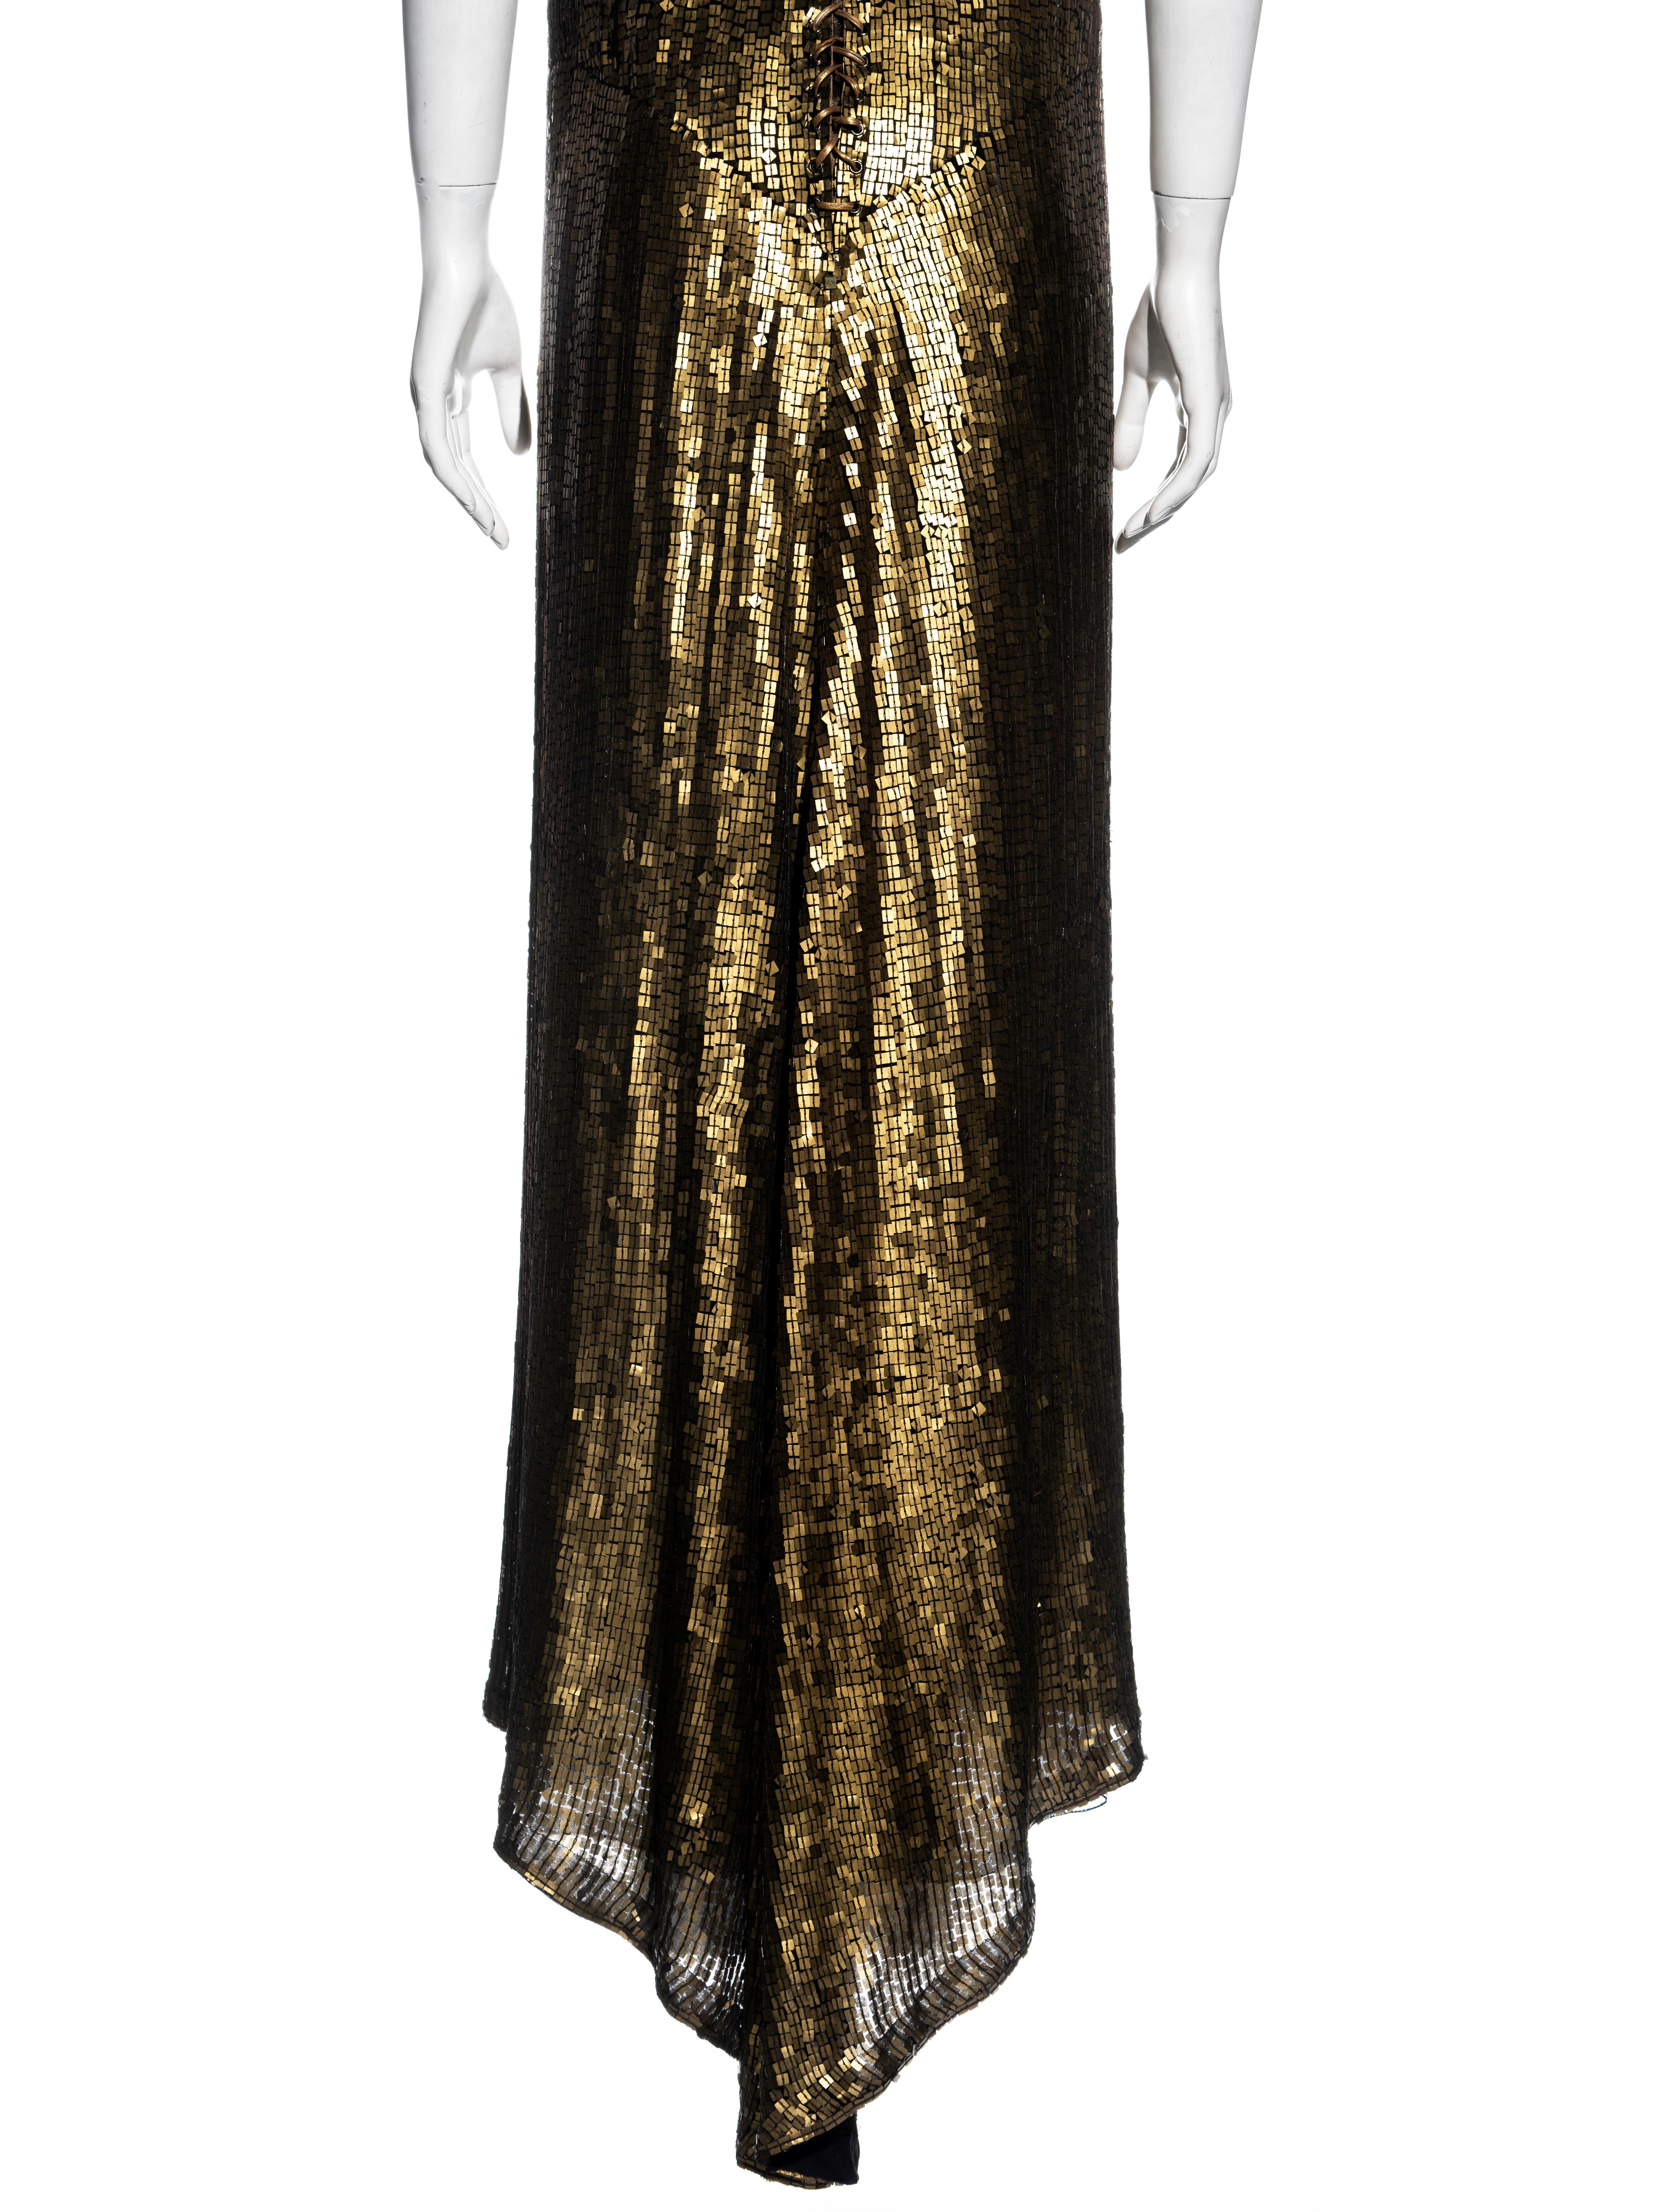 Azzedine Alaia couture metallic gold sequin evening dress, fw 1990 6